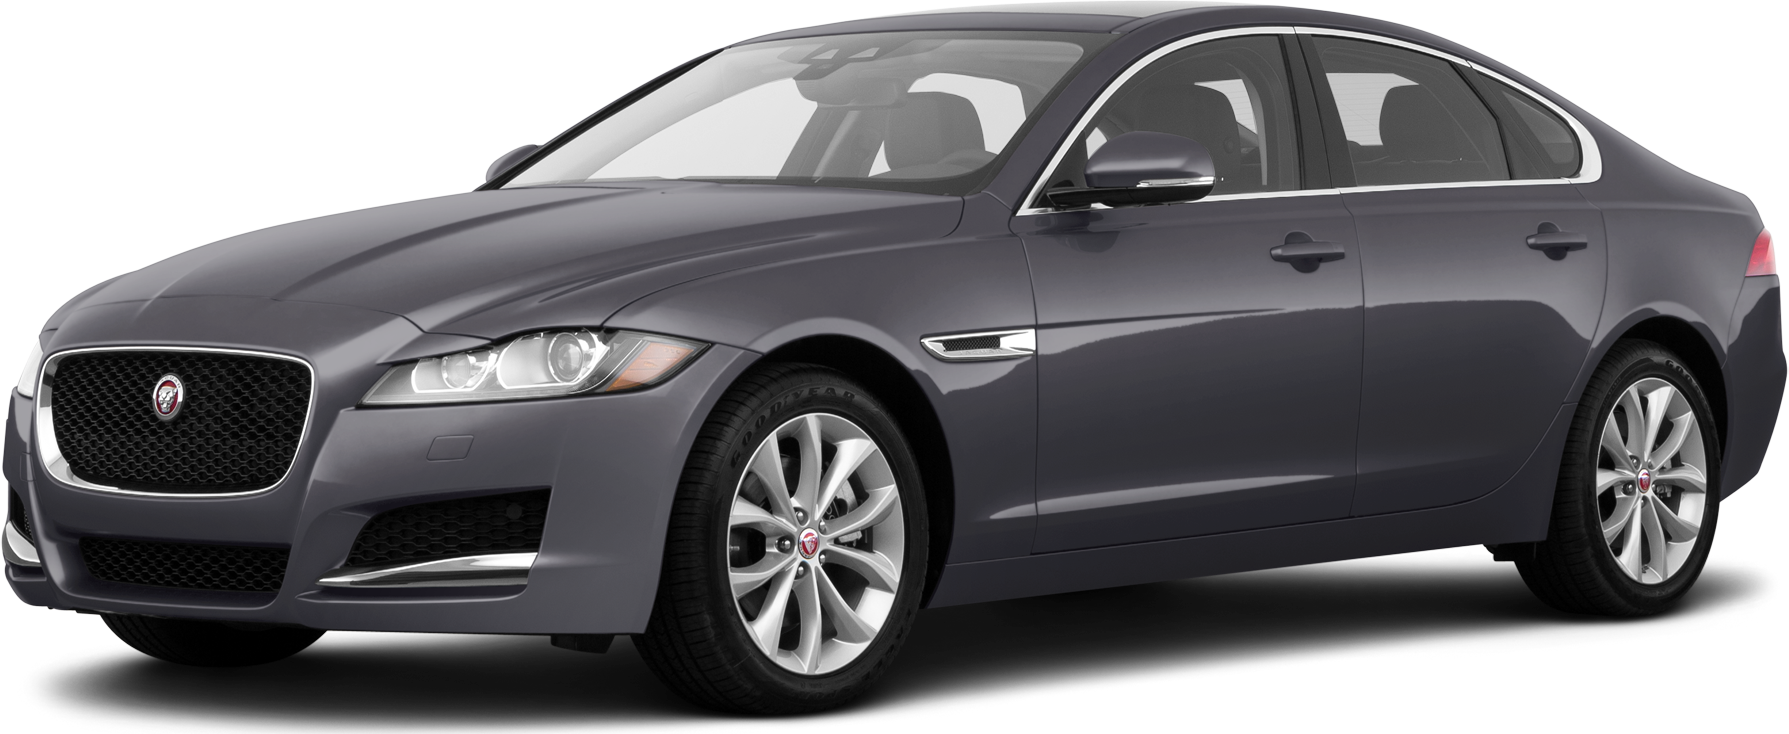 2019 Jaguar Xf Prices Reviews Pictures Kelley Blue Book